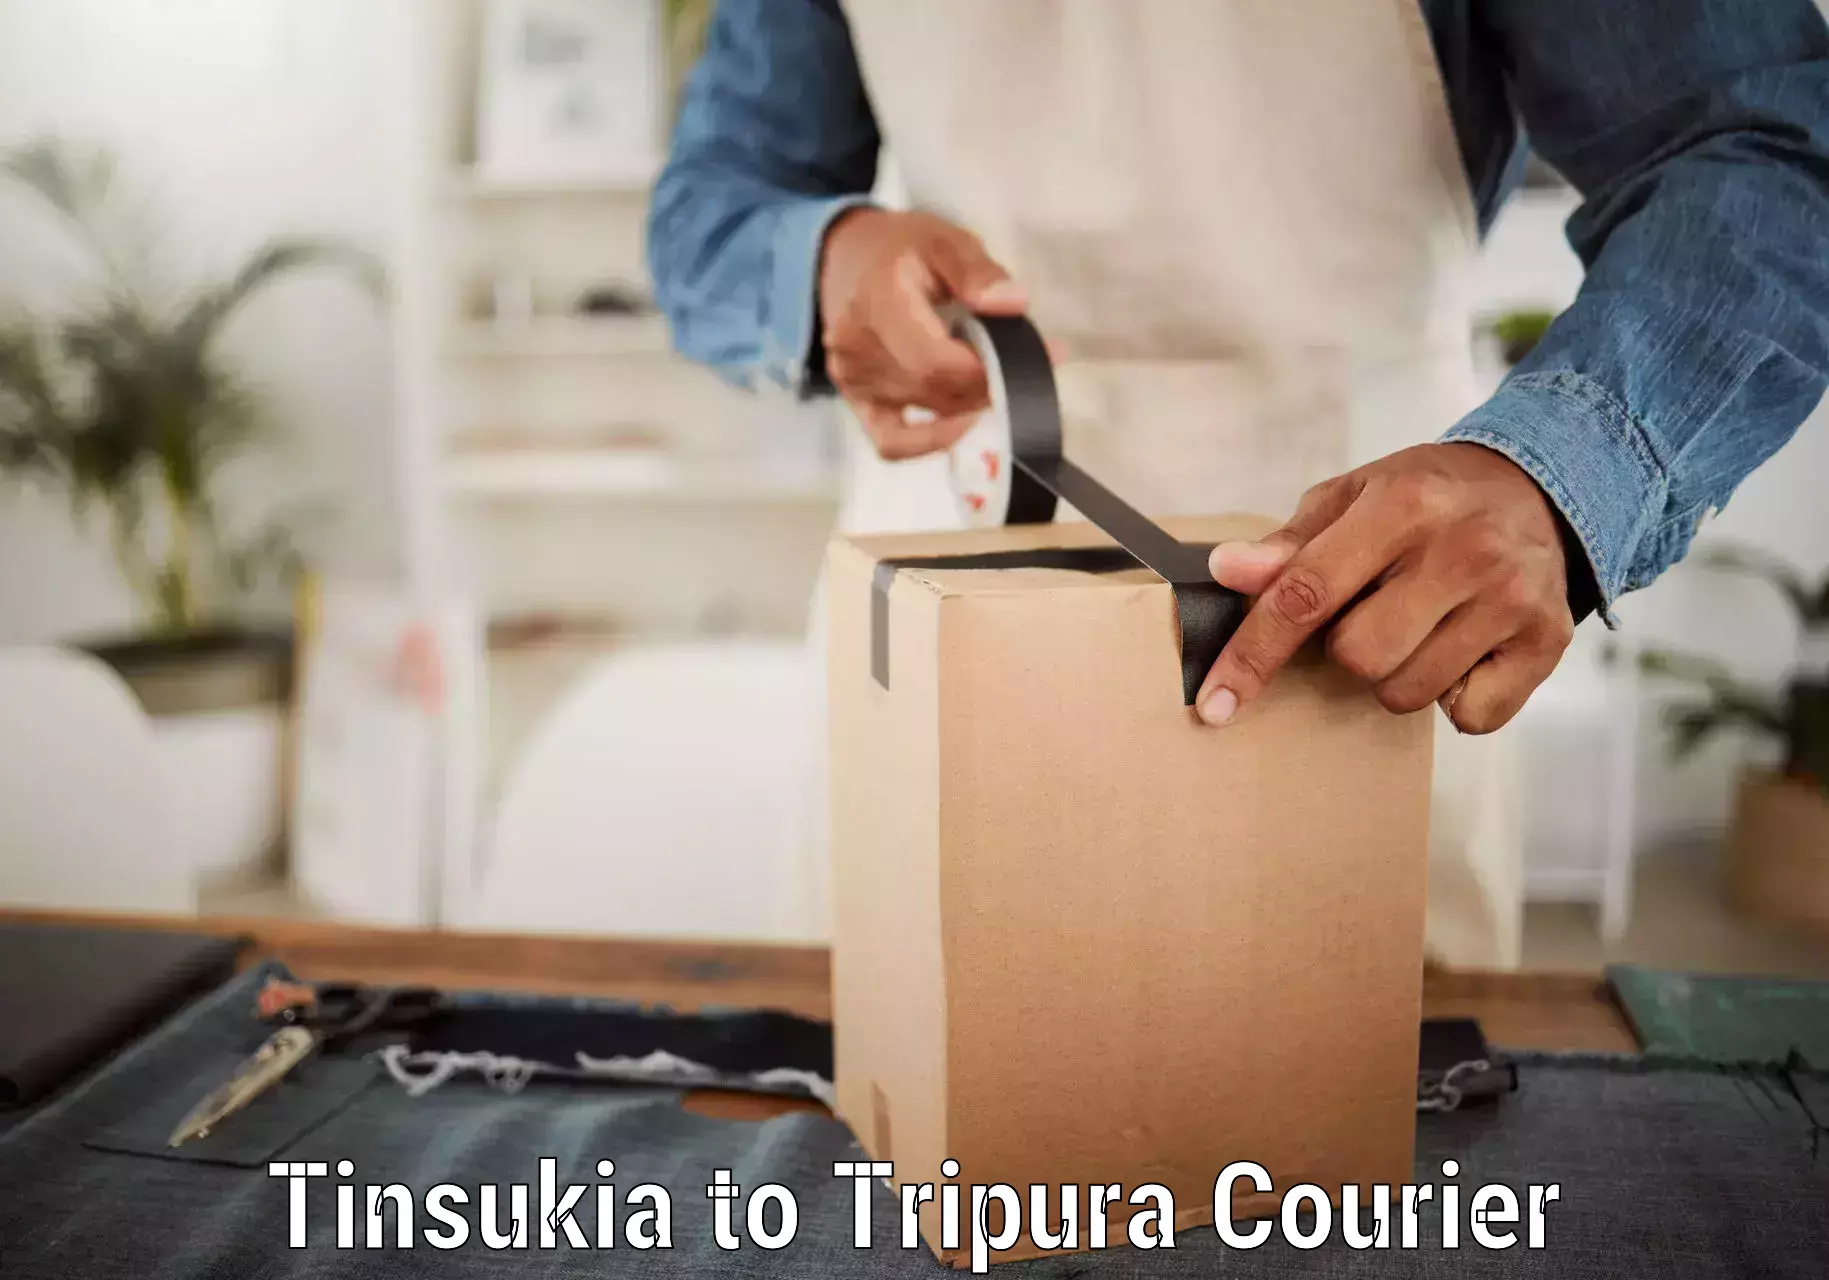 Courier service comparison Tinsukia to Tripura